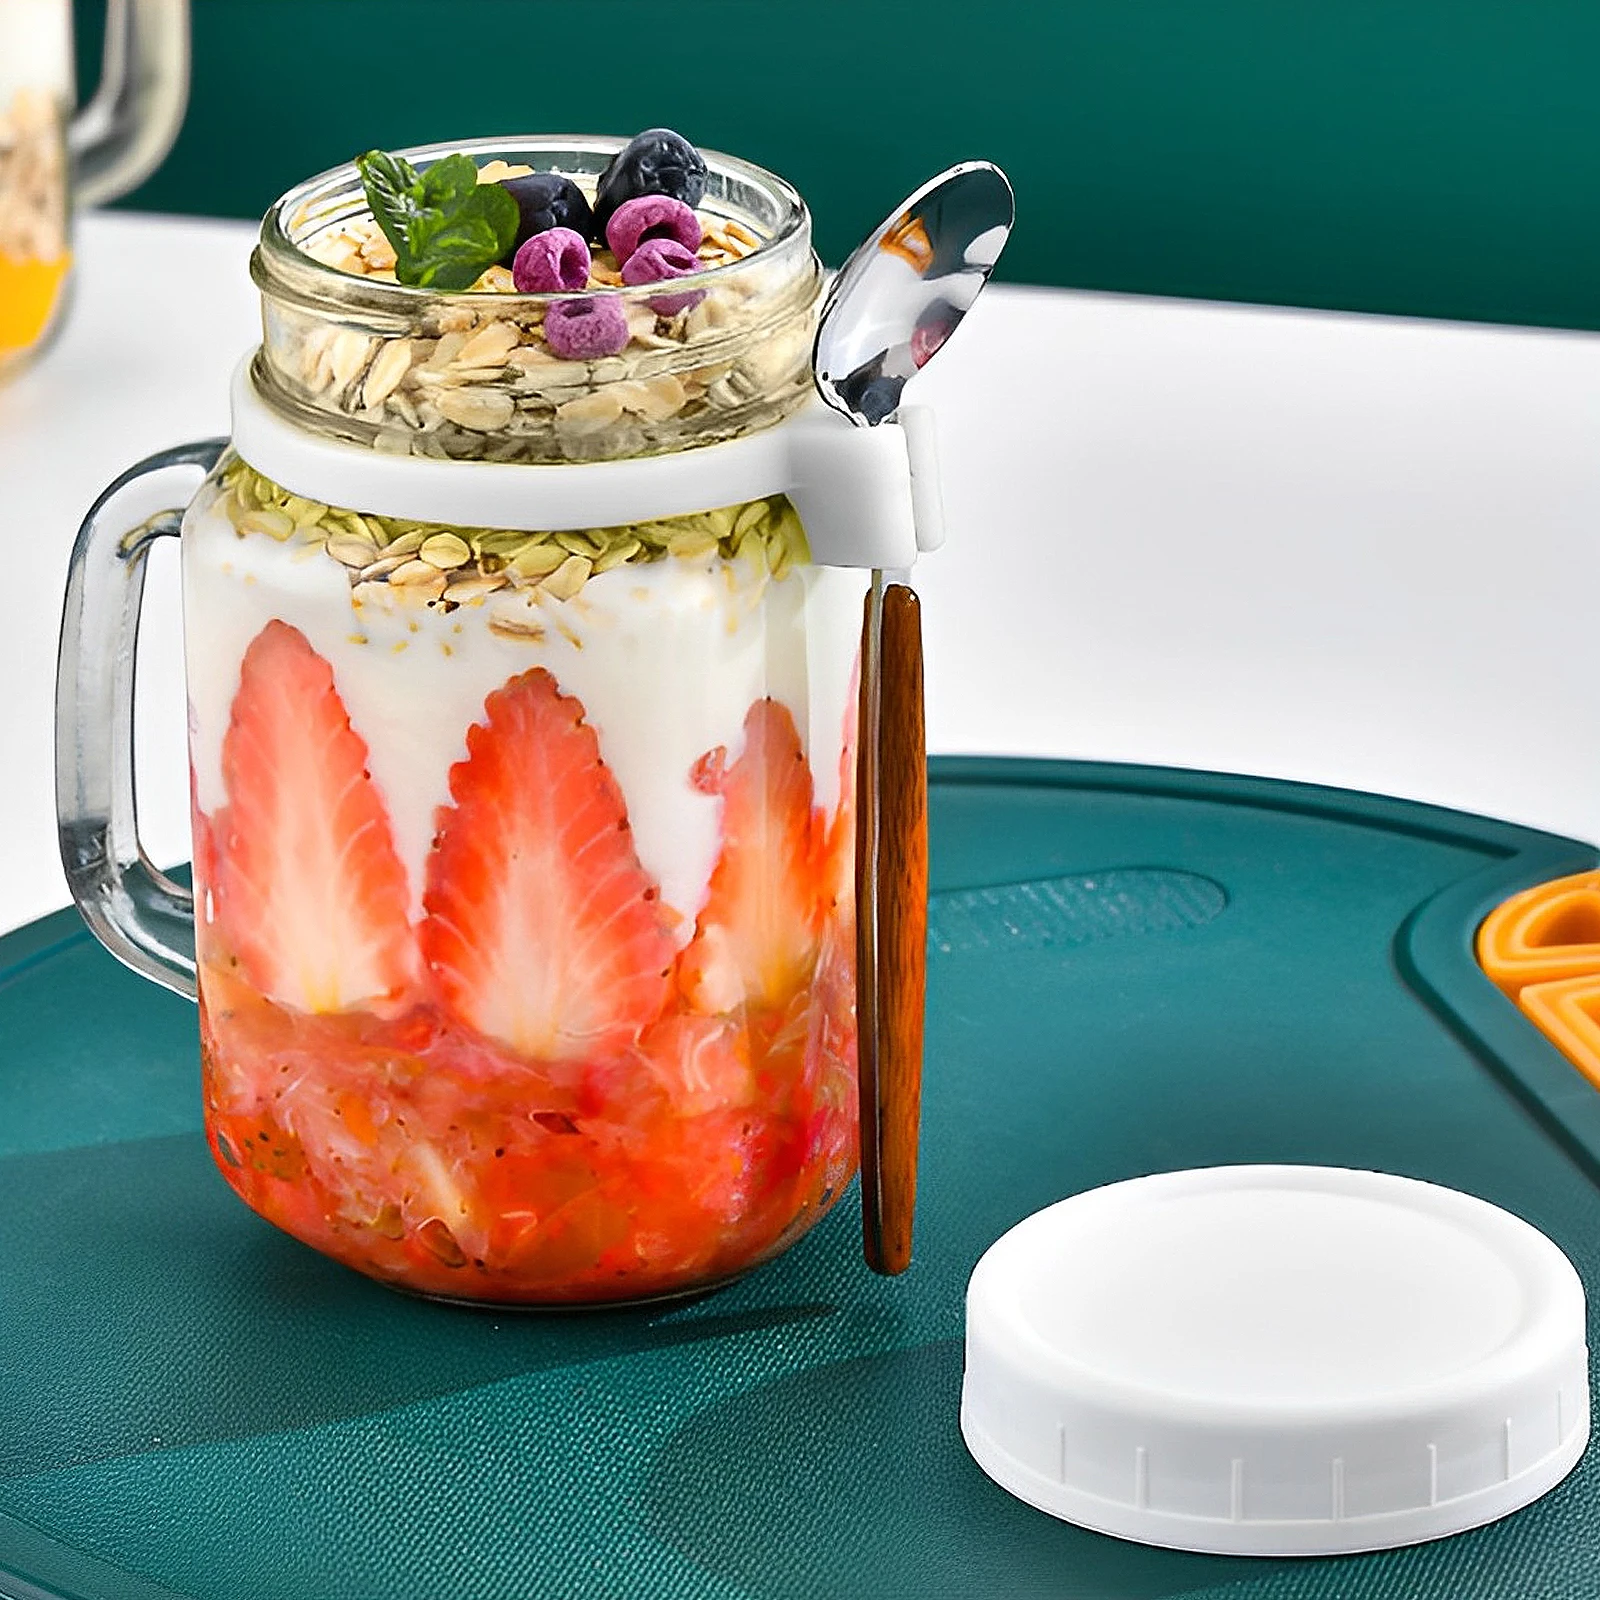 https://ae01.alicdn.com/kf/S4986226048d546a8918648e2ce7d0a5bm/2Pcs-16oz-Oats-Container-Milk-Fruit-Salad-Food-Storage-Airtight-Portable-Glass-Oatmeal-Jars-Overnight-Oatmeal.jpg